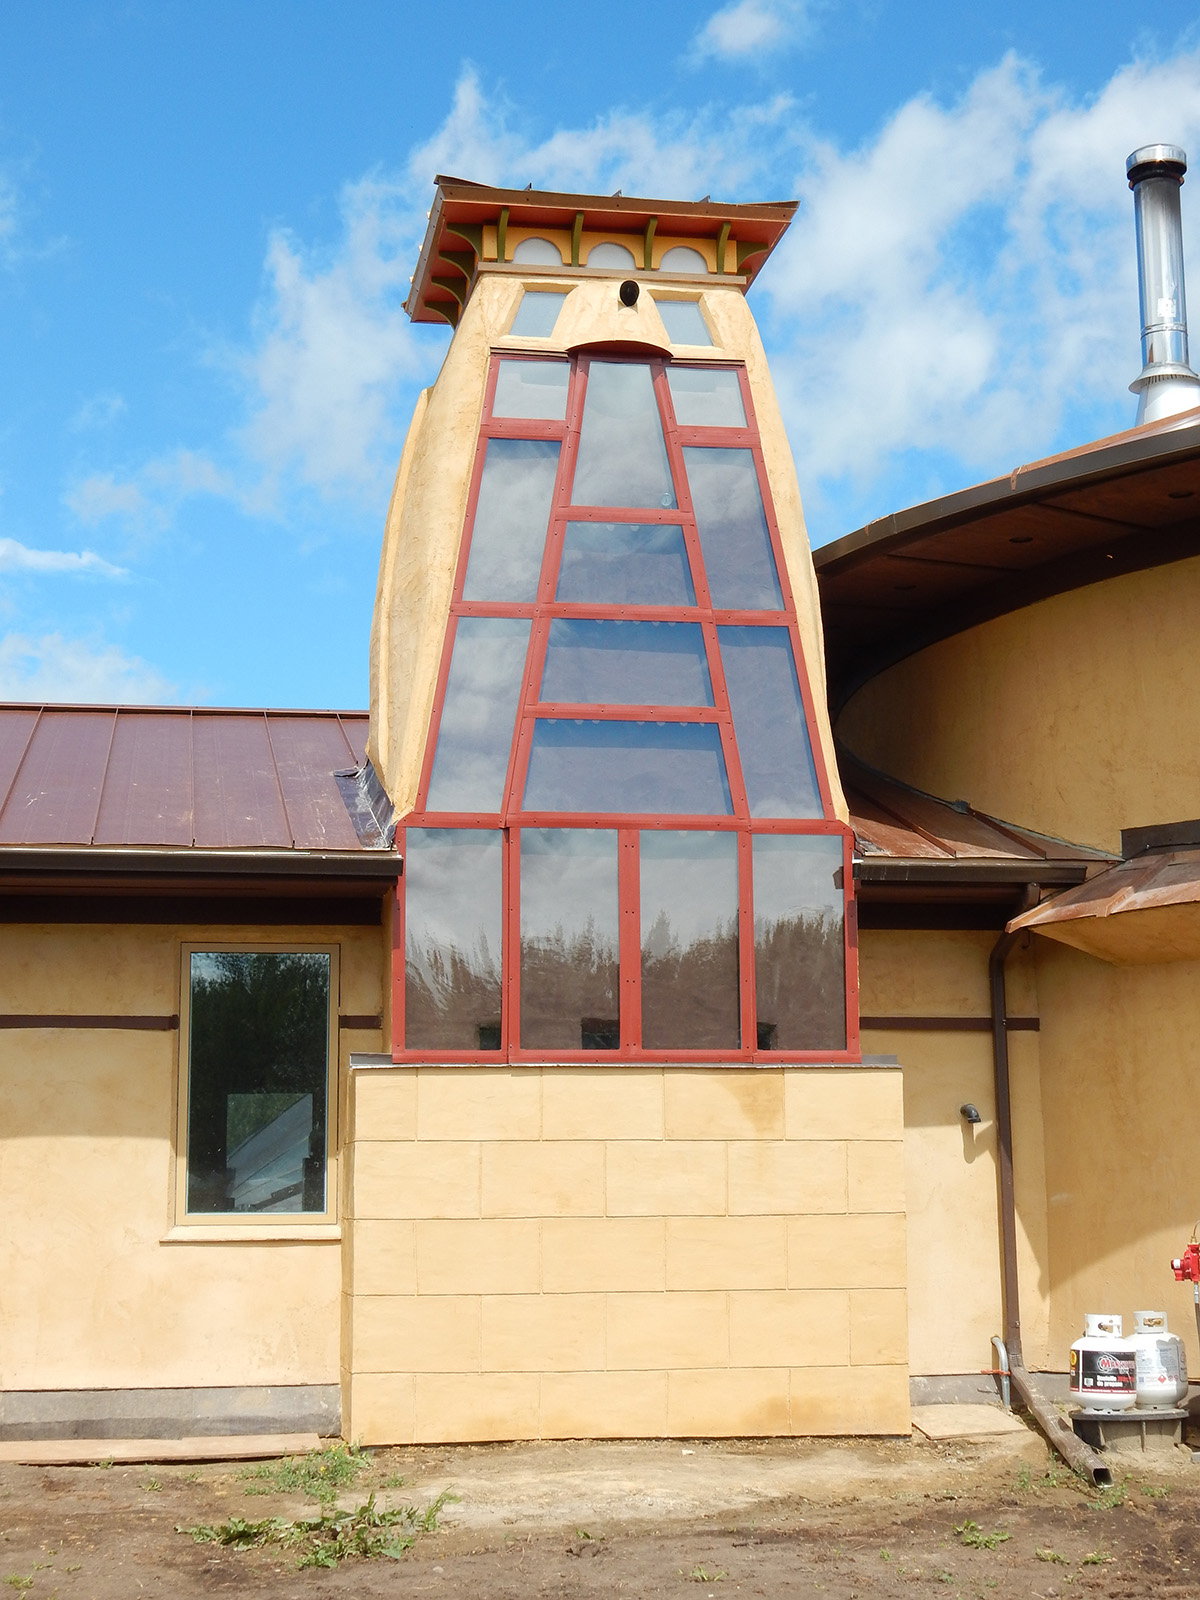 Solar Dragon House - Solar chimney